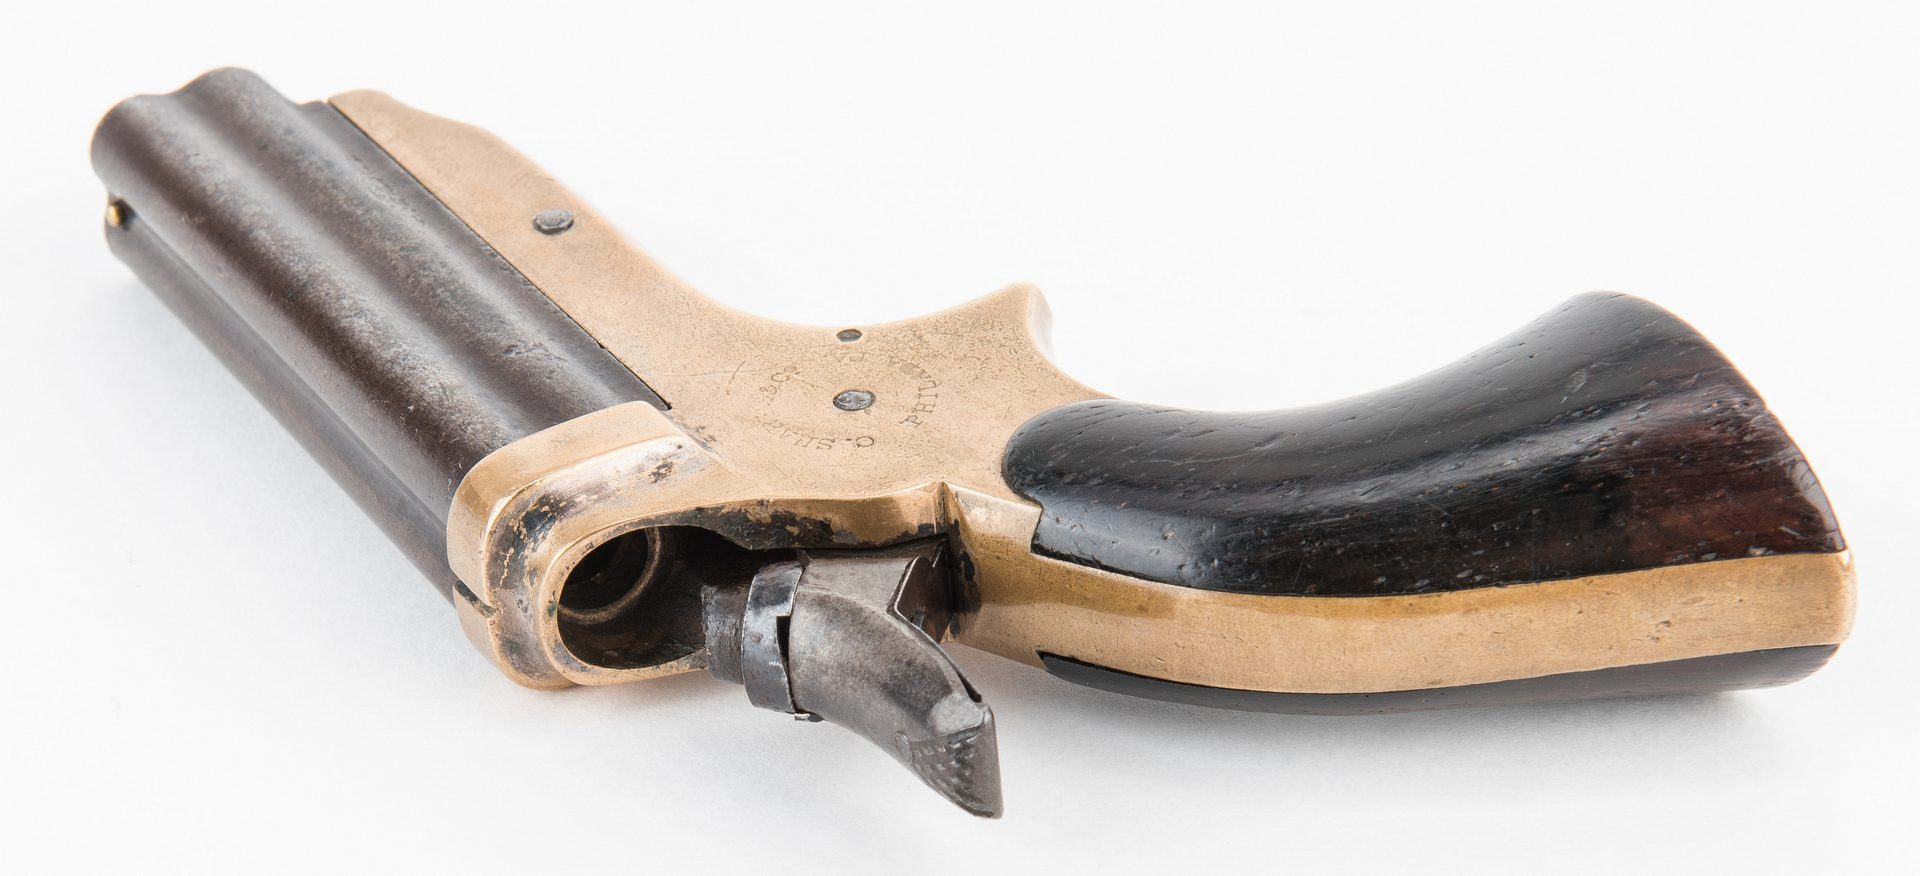 Lot 777: 2 Mid 19th Century Hand Guns, incl. Sharps, Colt